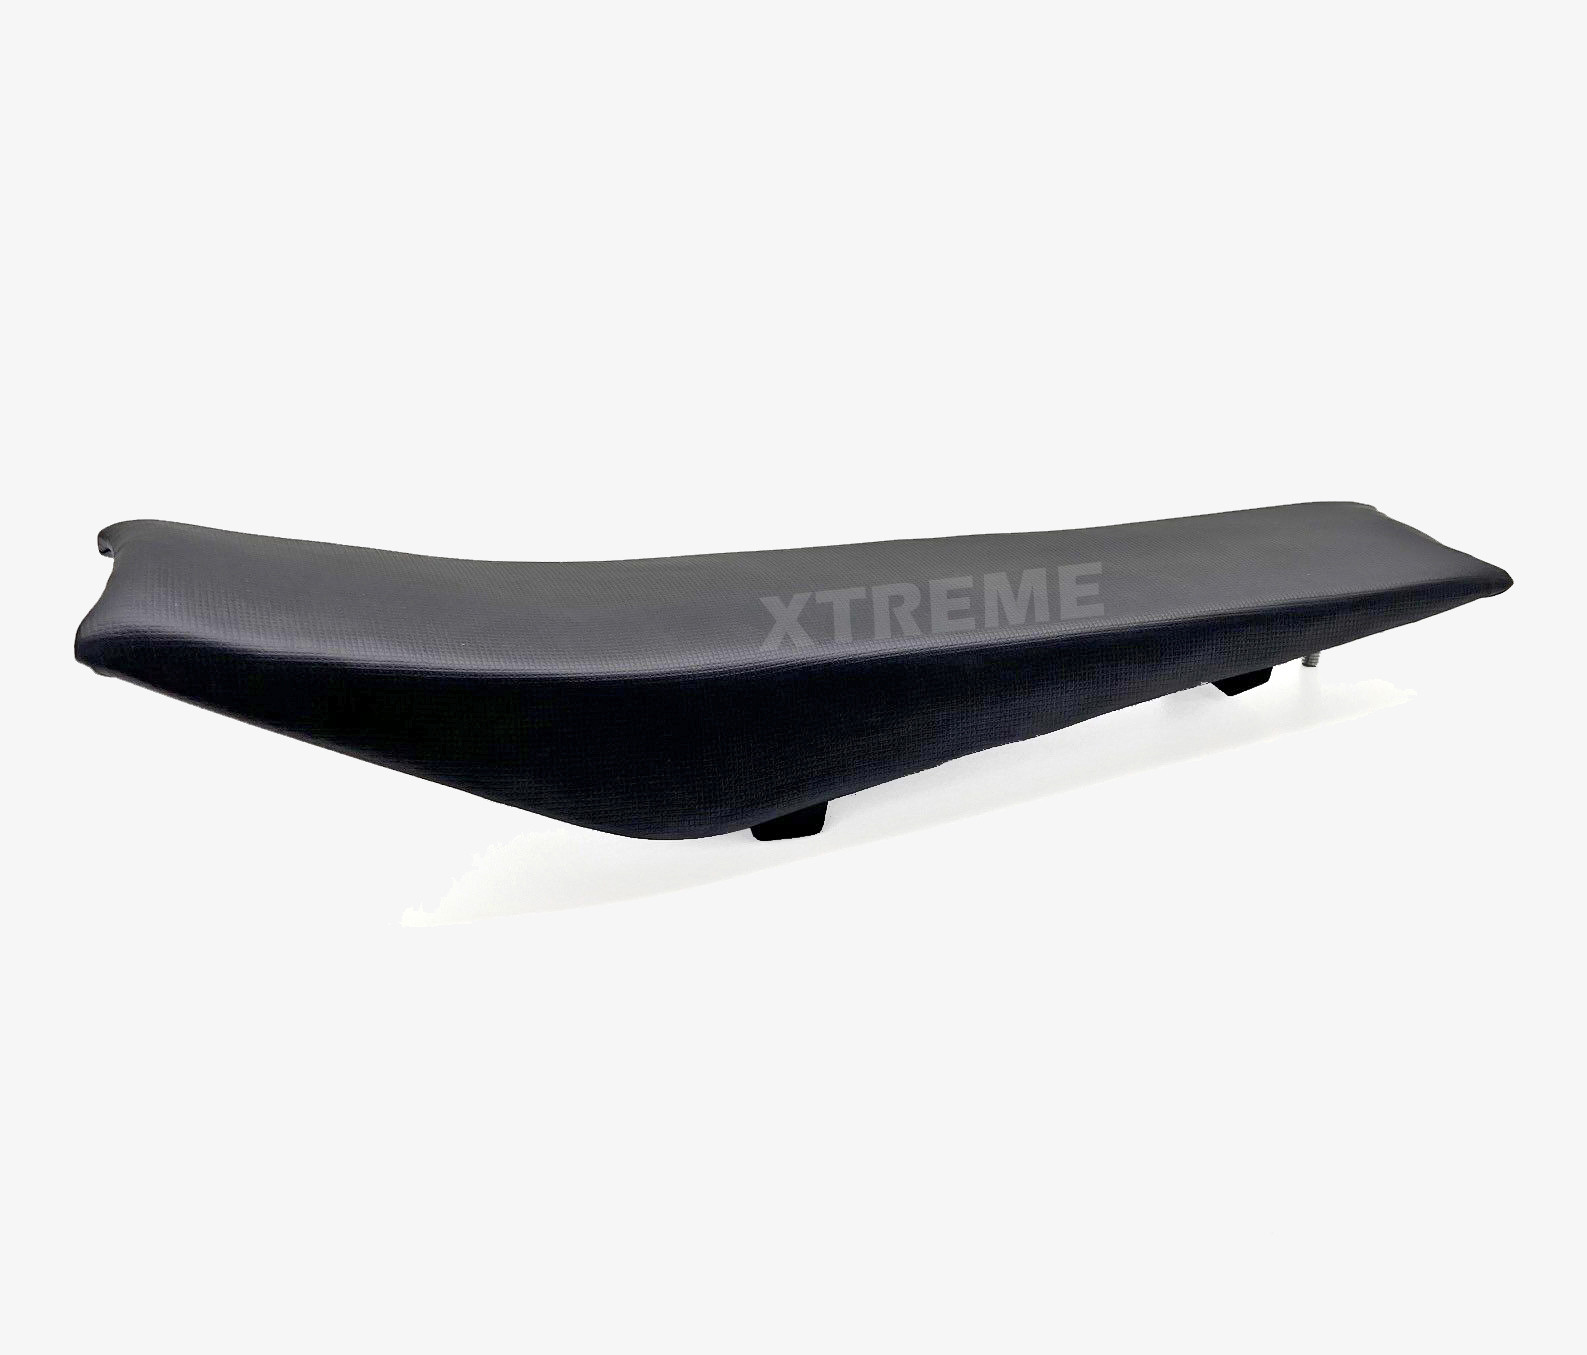 XTM MX60 60CC PETROL DIRT BIKE REPLACEMENT SEAT